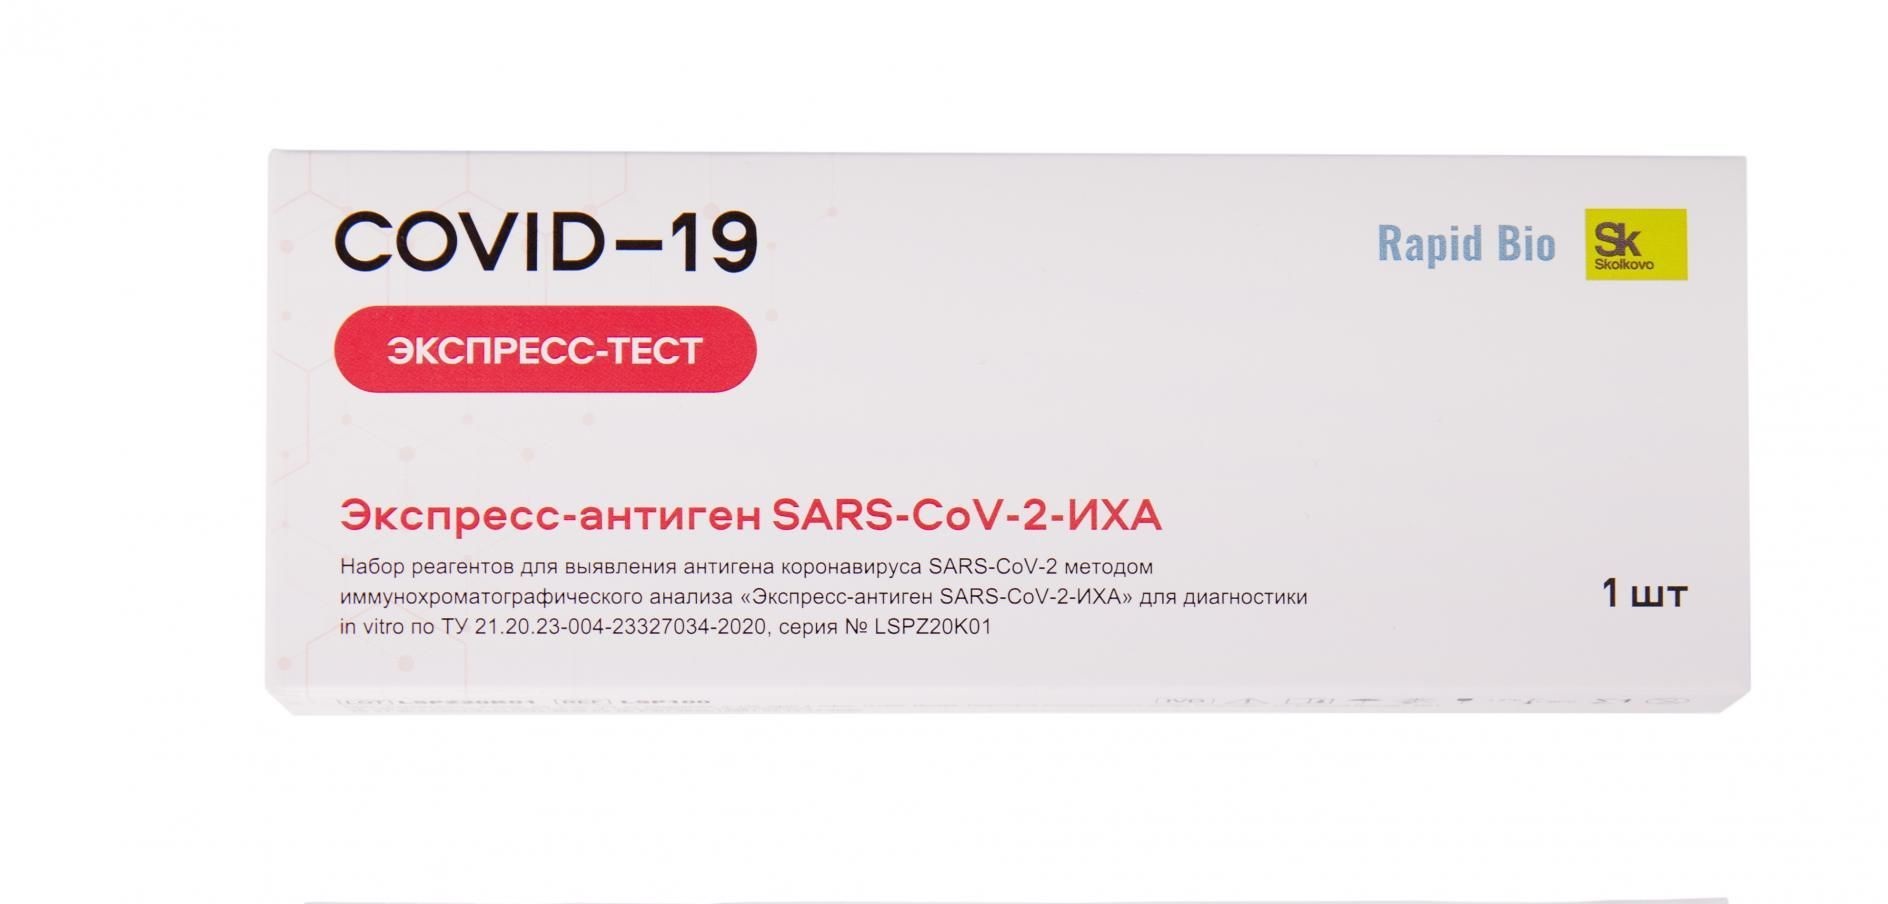 Rapid Bio экспресс-тест для выявления антигена коронавируса SARS-CoV-2 от Budzdorov